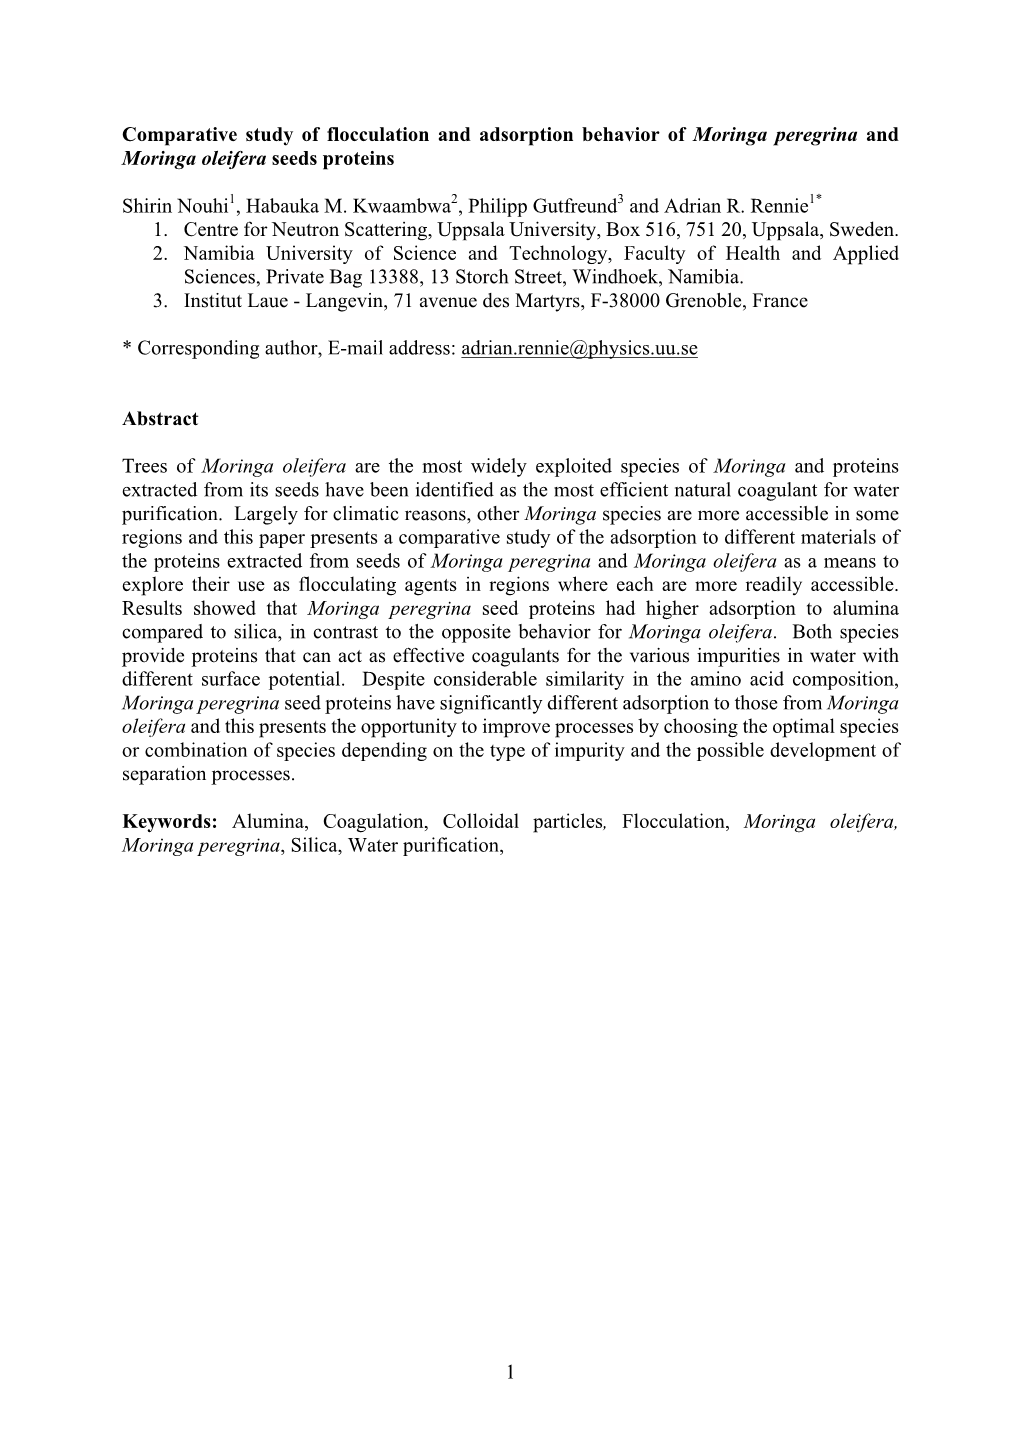 1 Comparative Study of Flocculation and Adsorption Behavior of Moringa